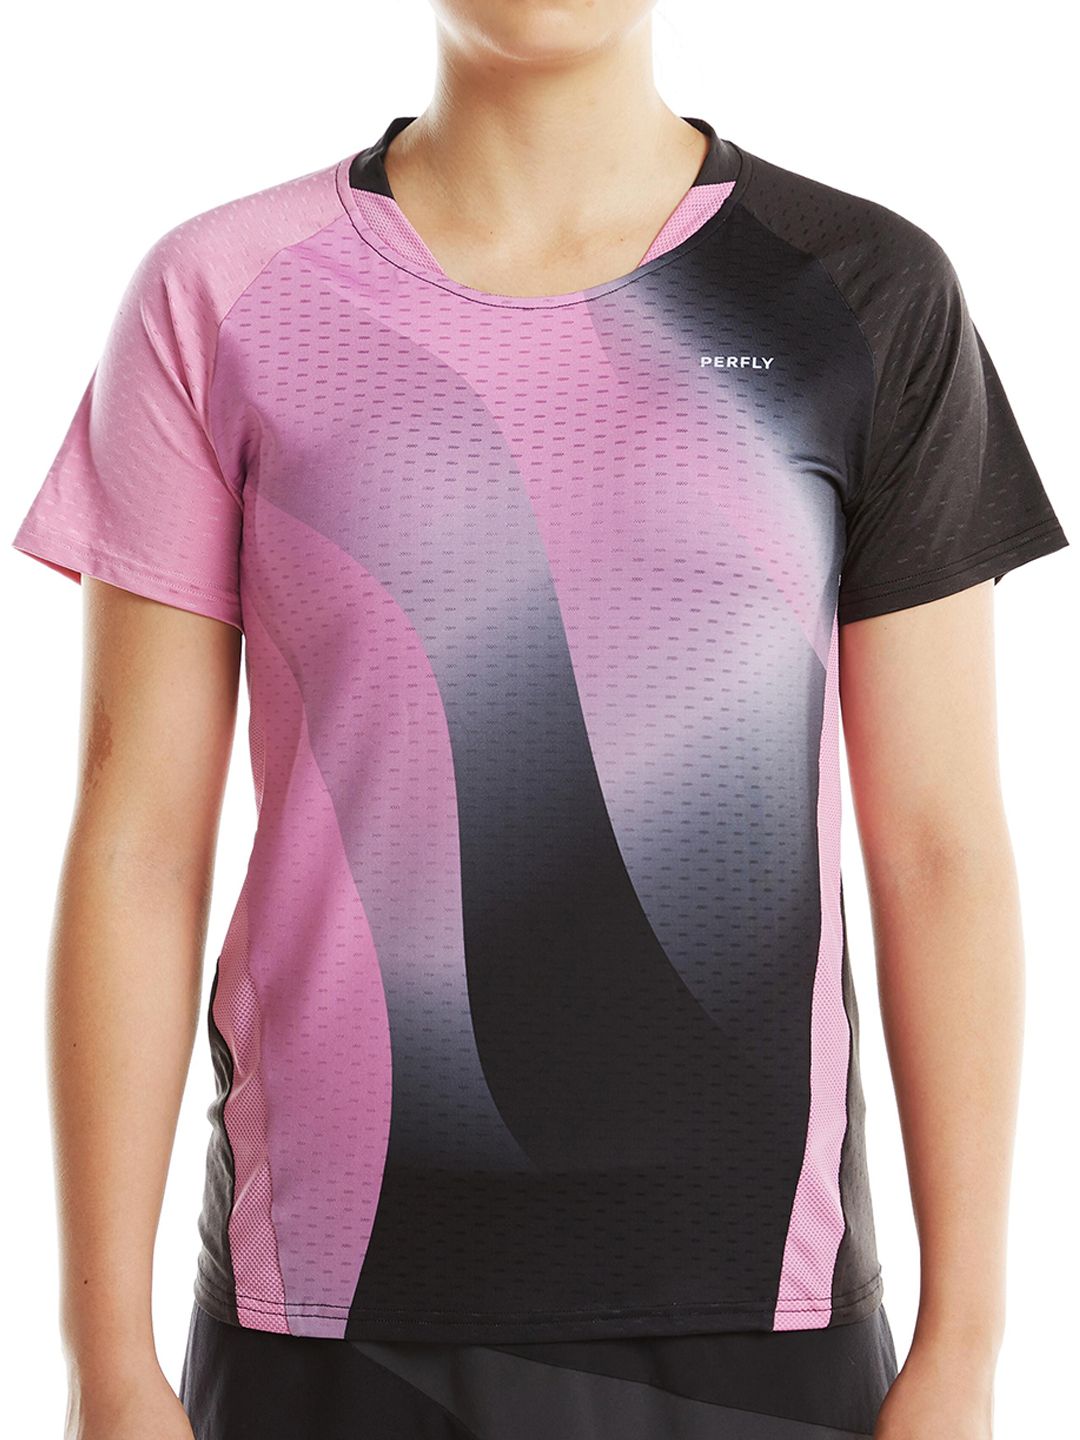 PERFLY By Decathlon Women Black Colourblocked Round Neck Badminton T-shirt Price in India